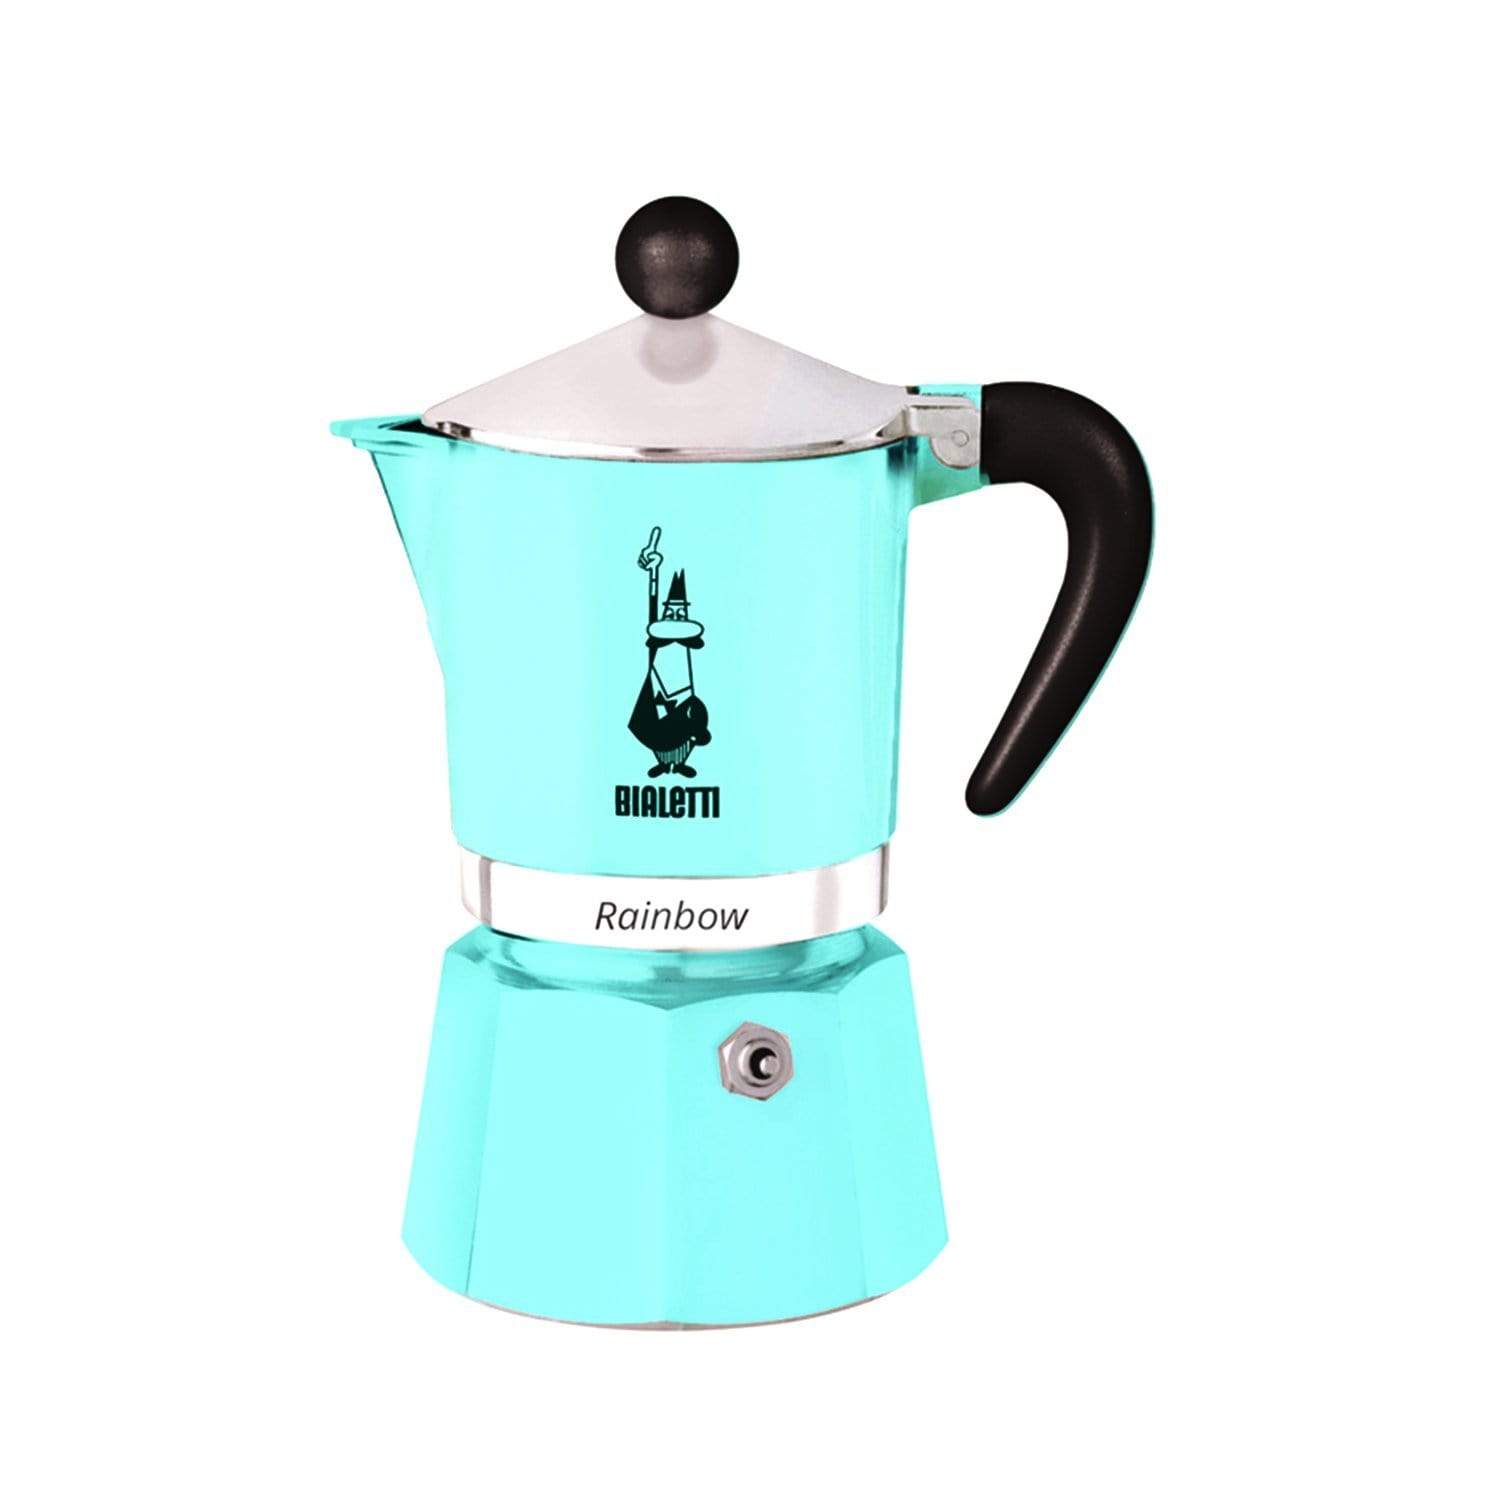 Bialetti Rainbow Coffee Maker - Blue, 6 Cups - 5043 - Jashanmal Home